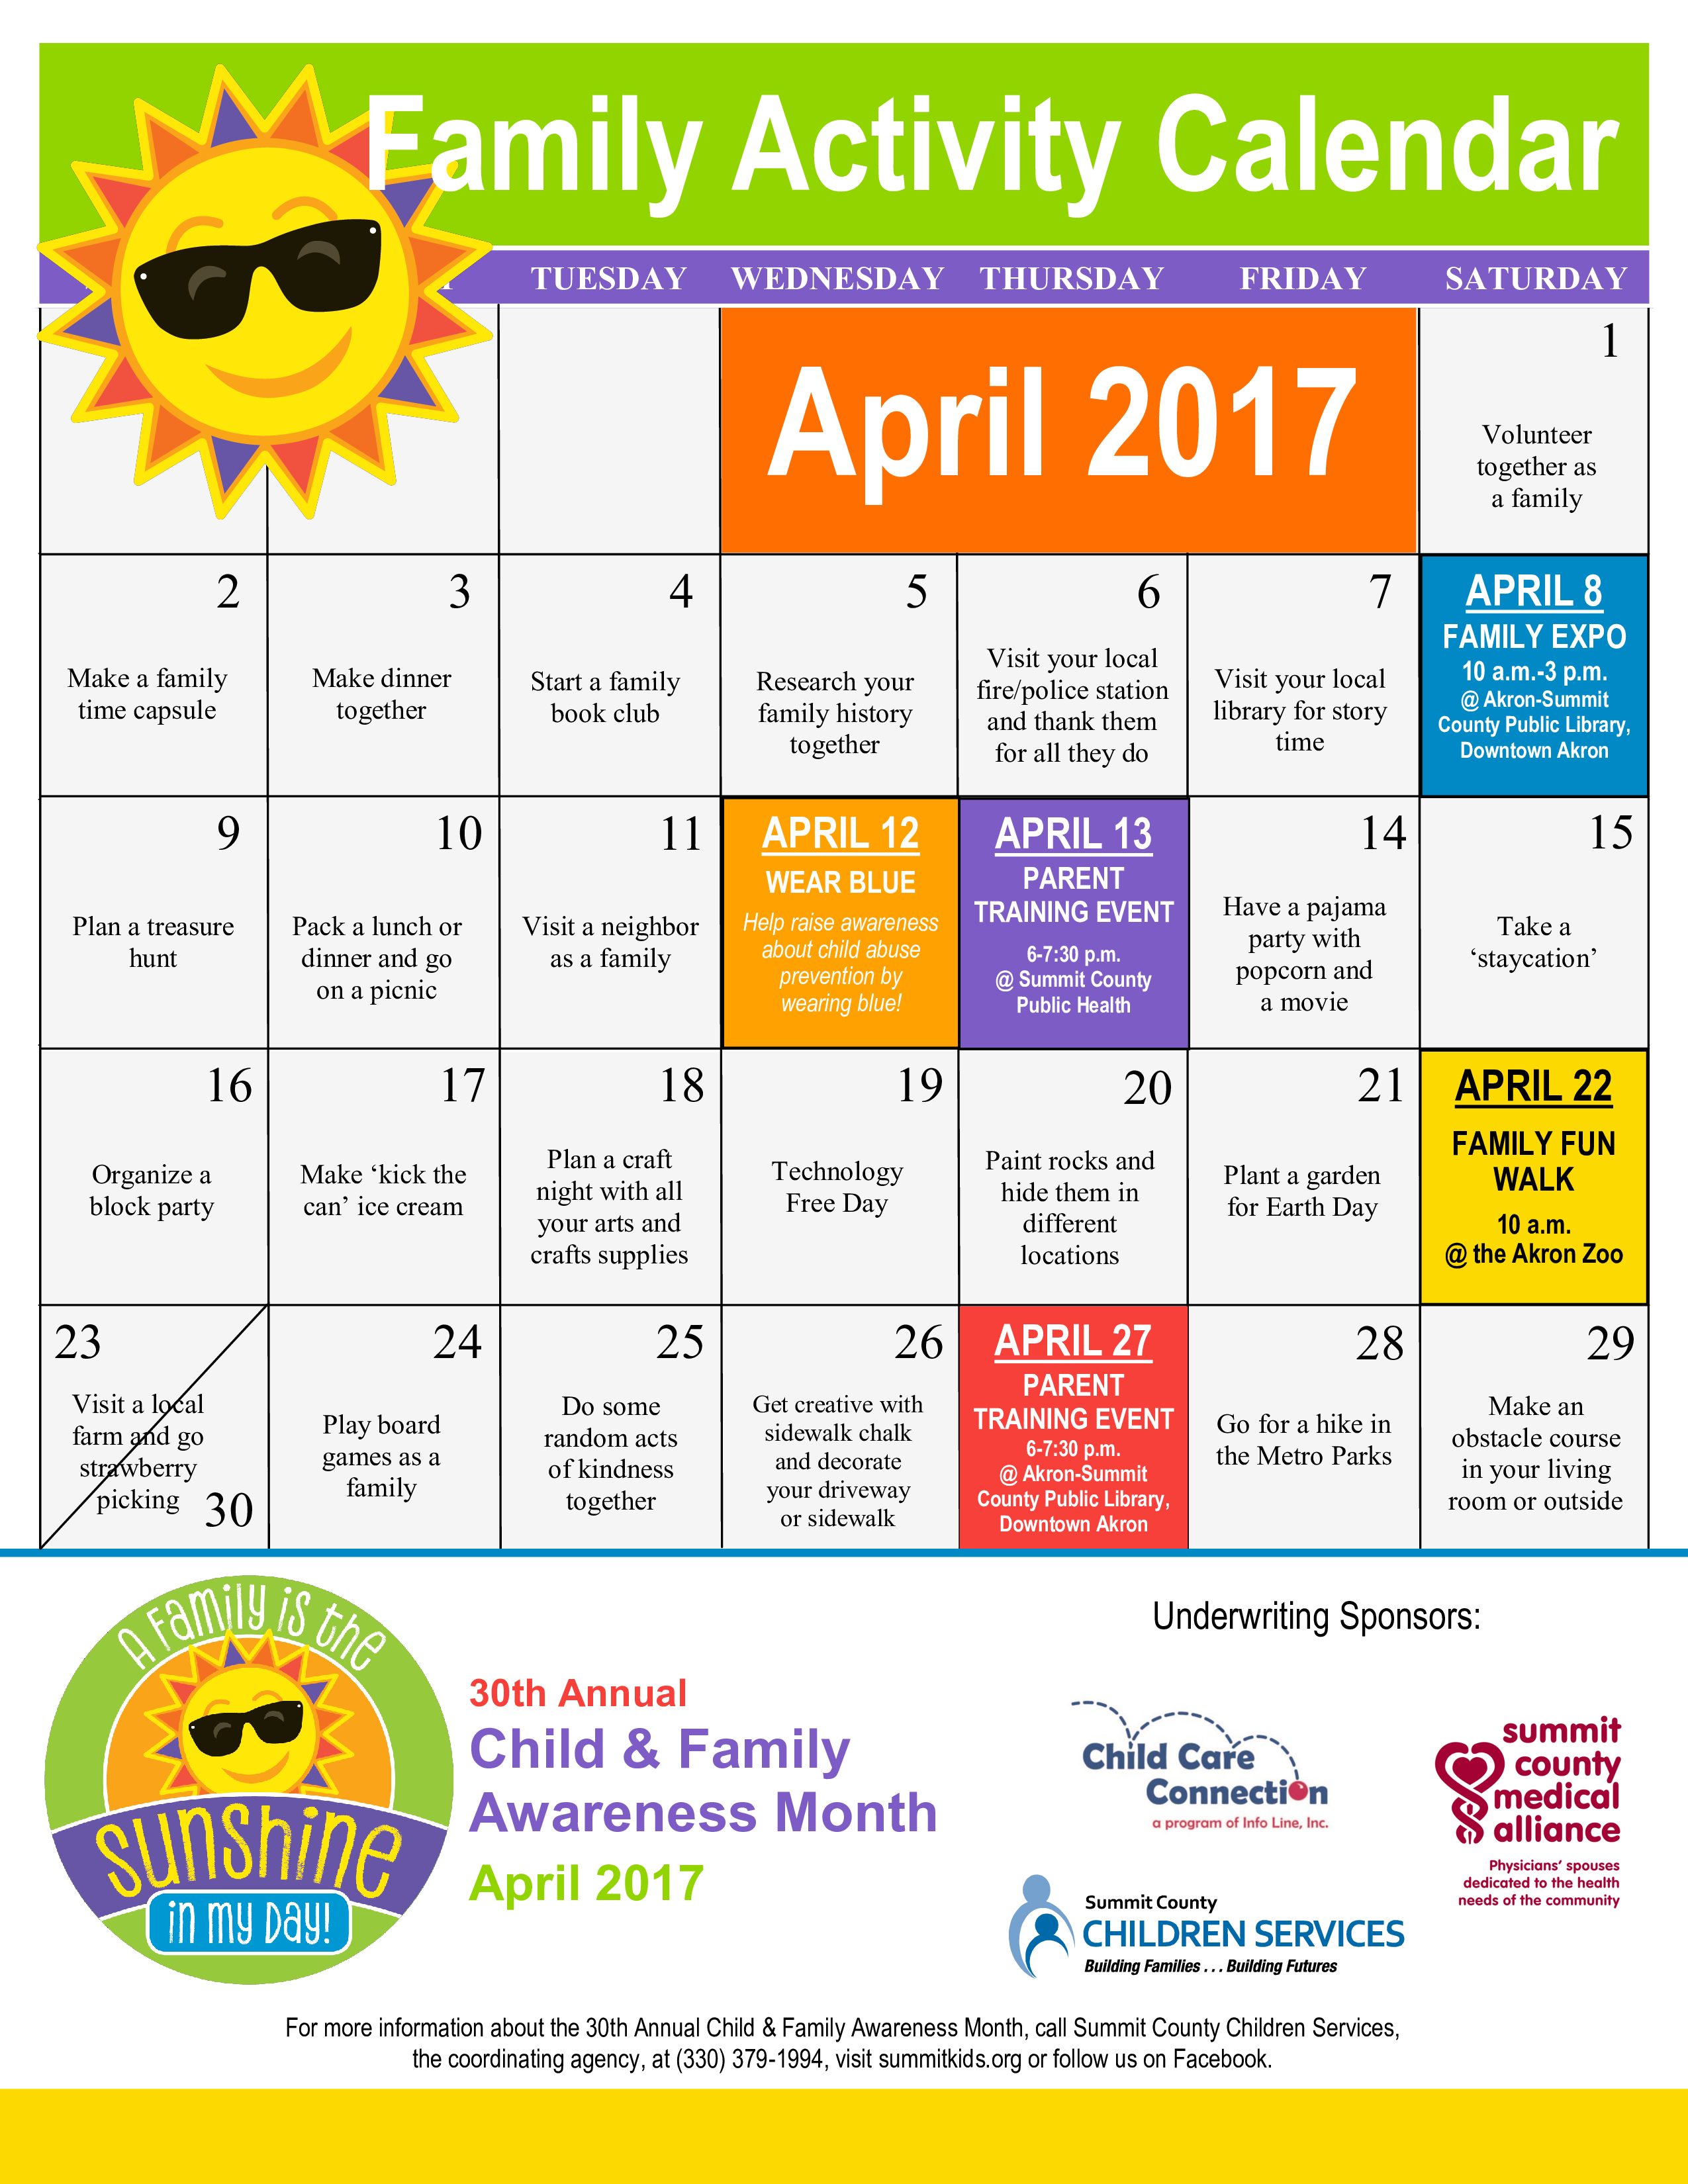 Family Activity Calendar Templates at allbusinesstemplates com